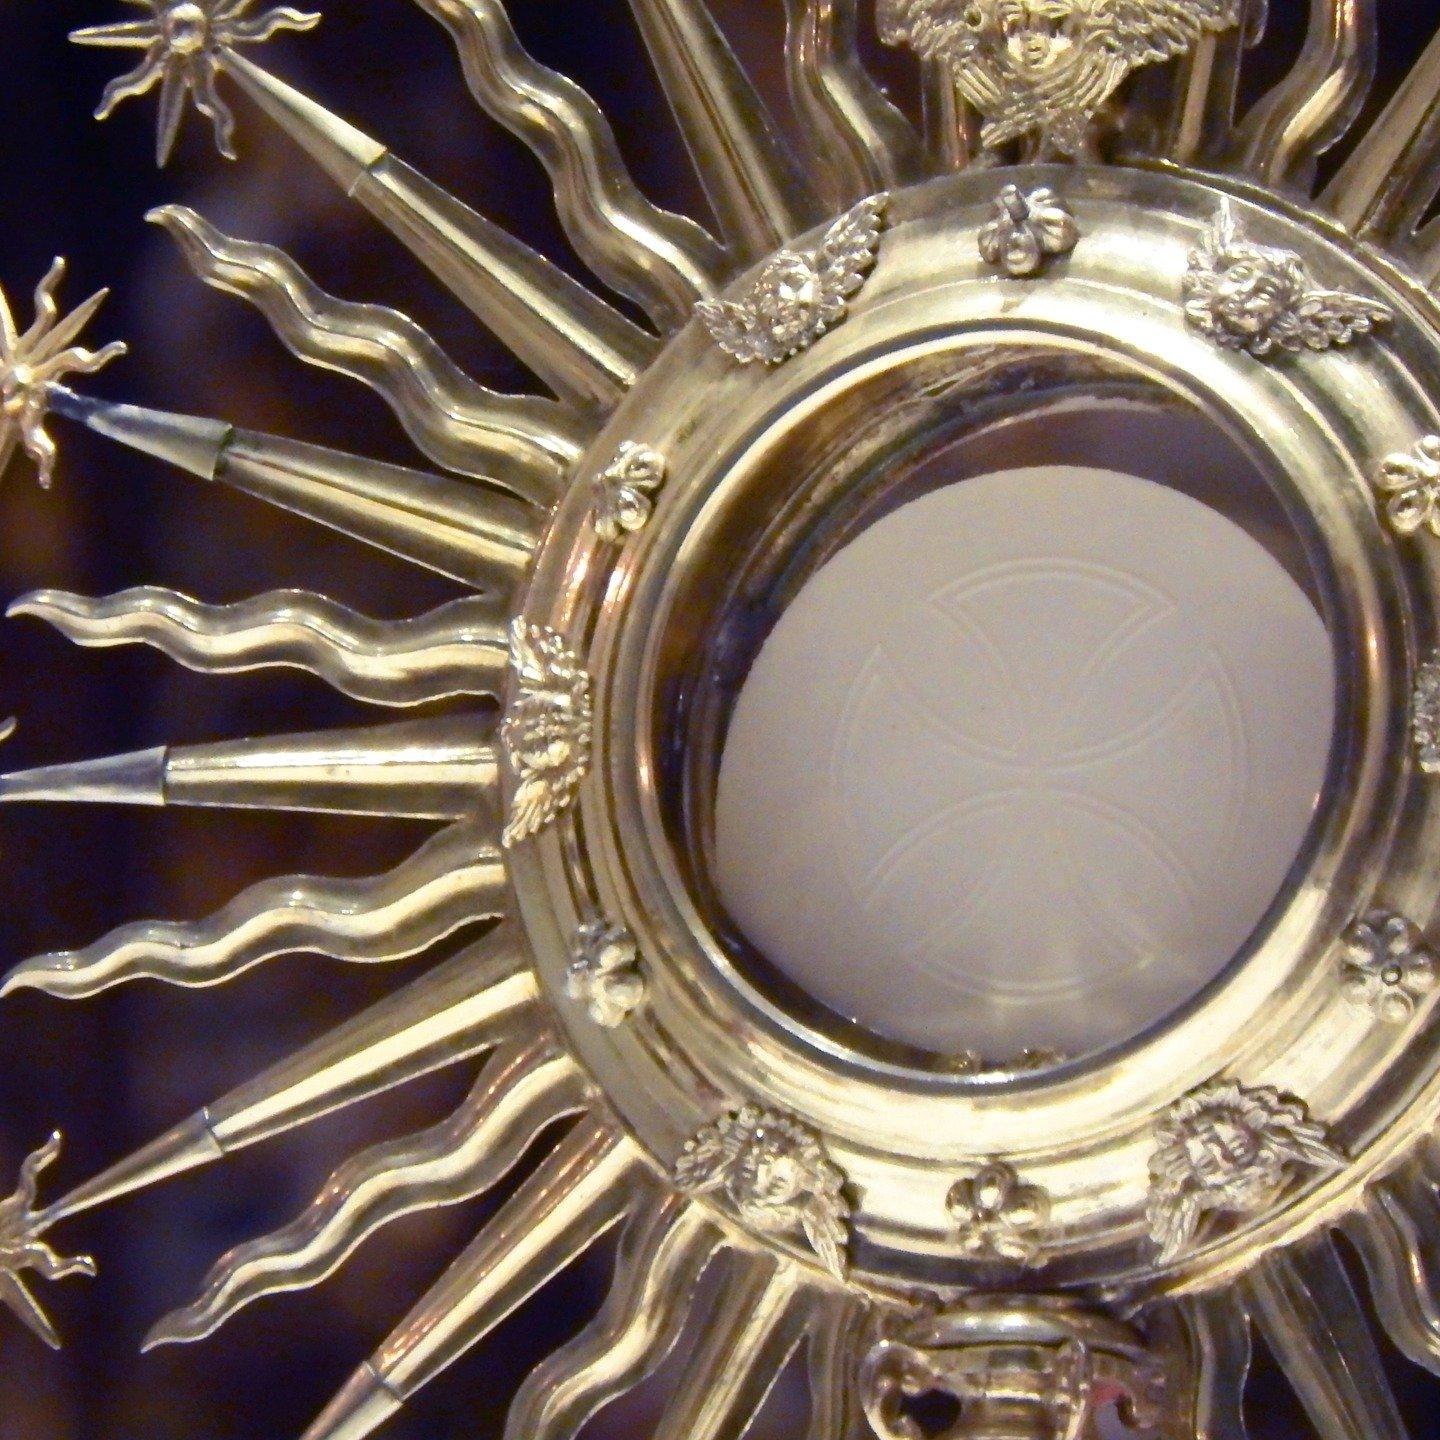 eucharist-3215813_1920